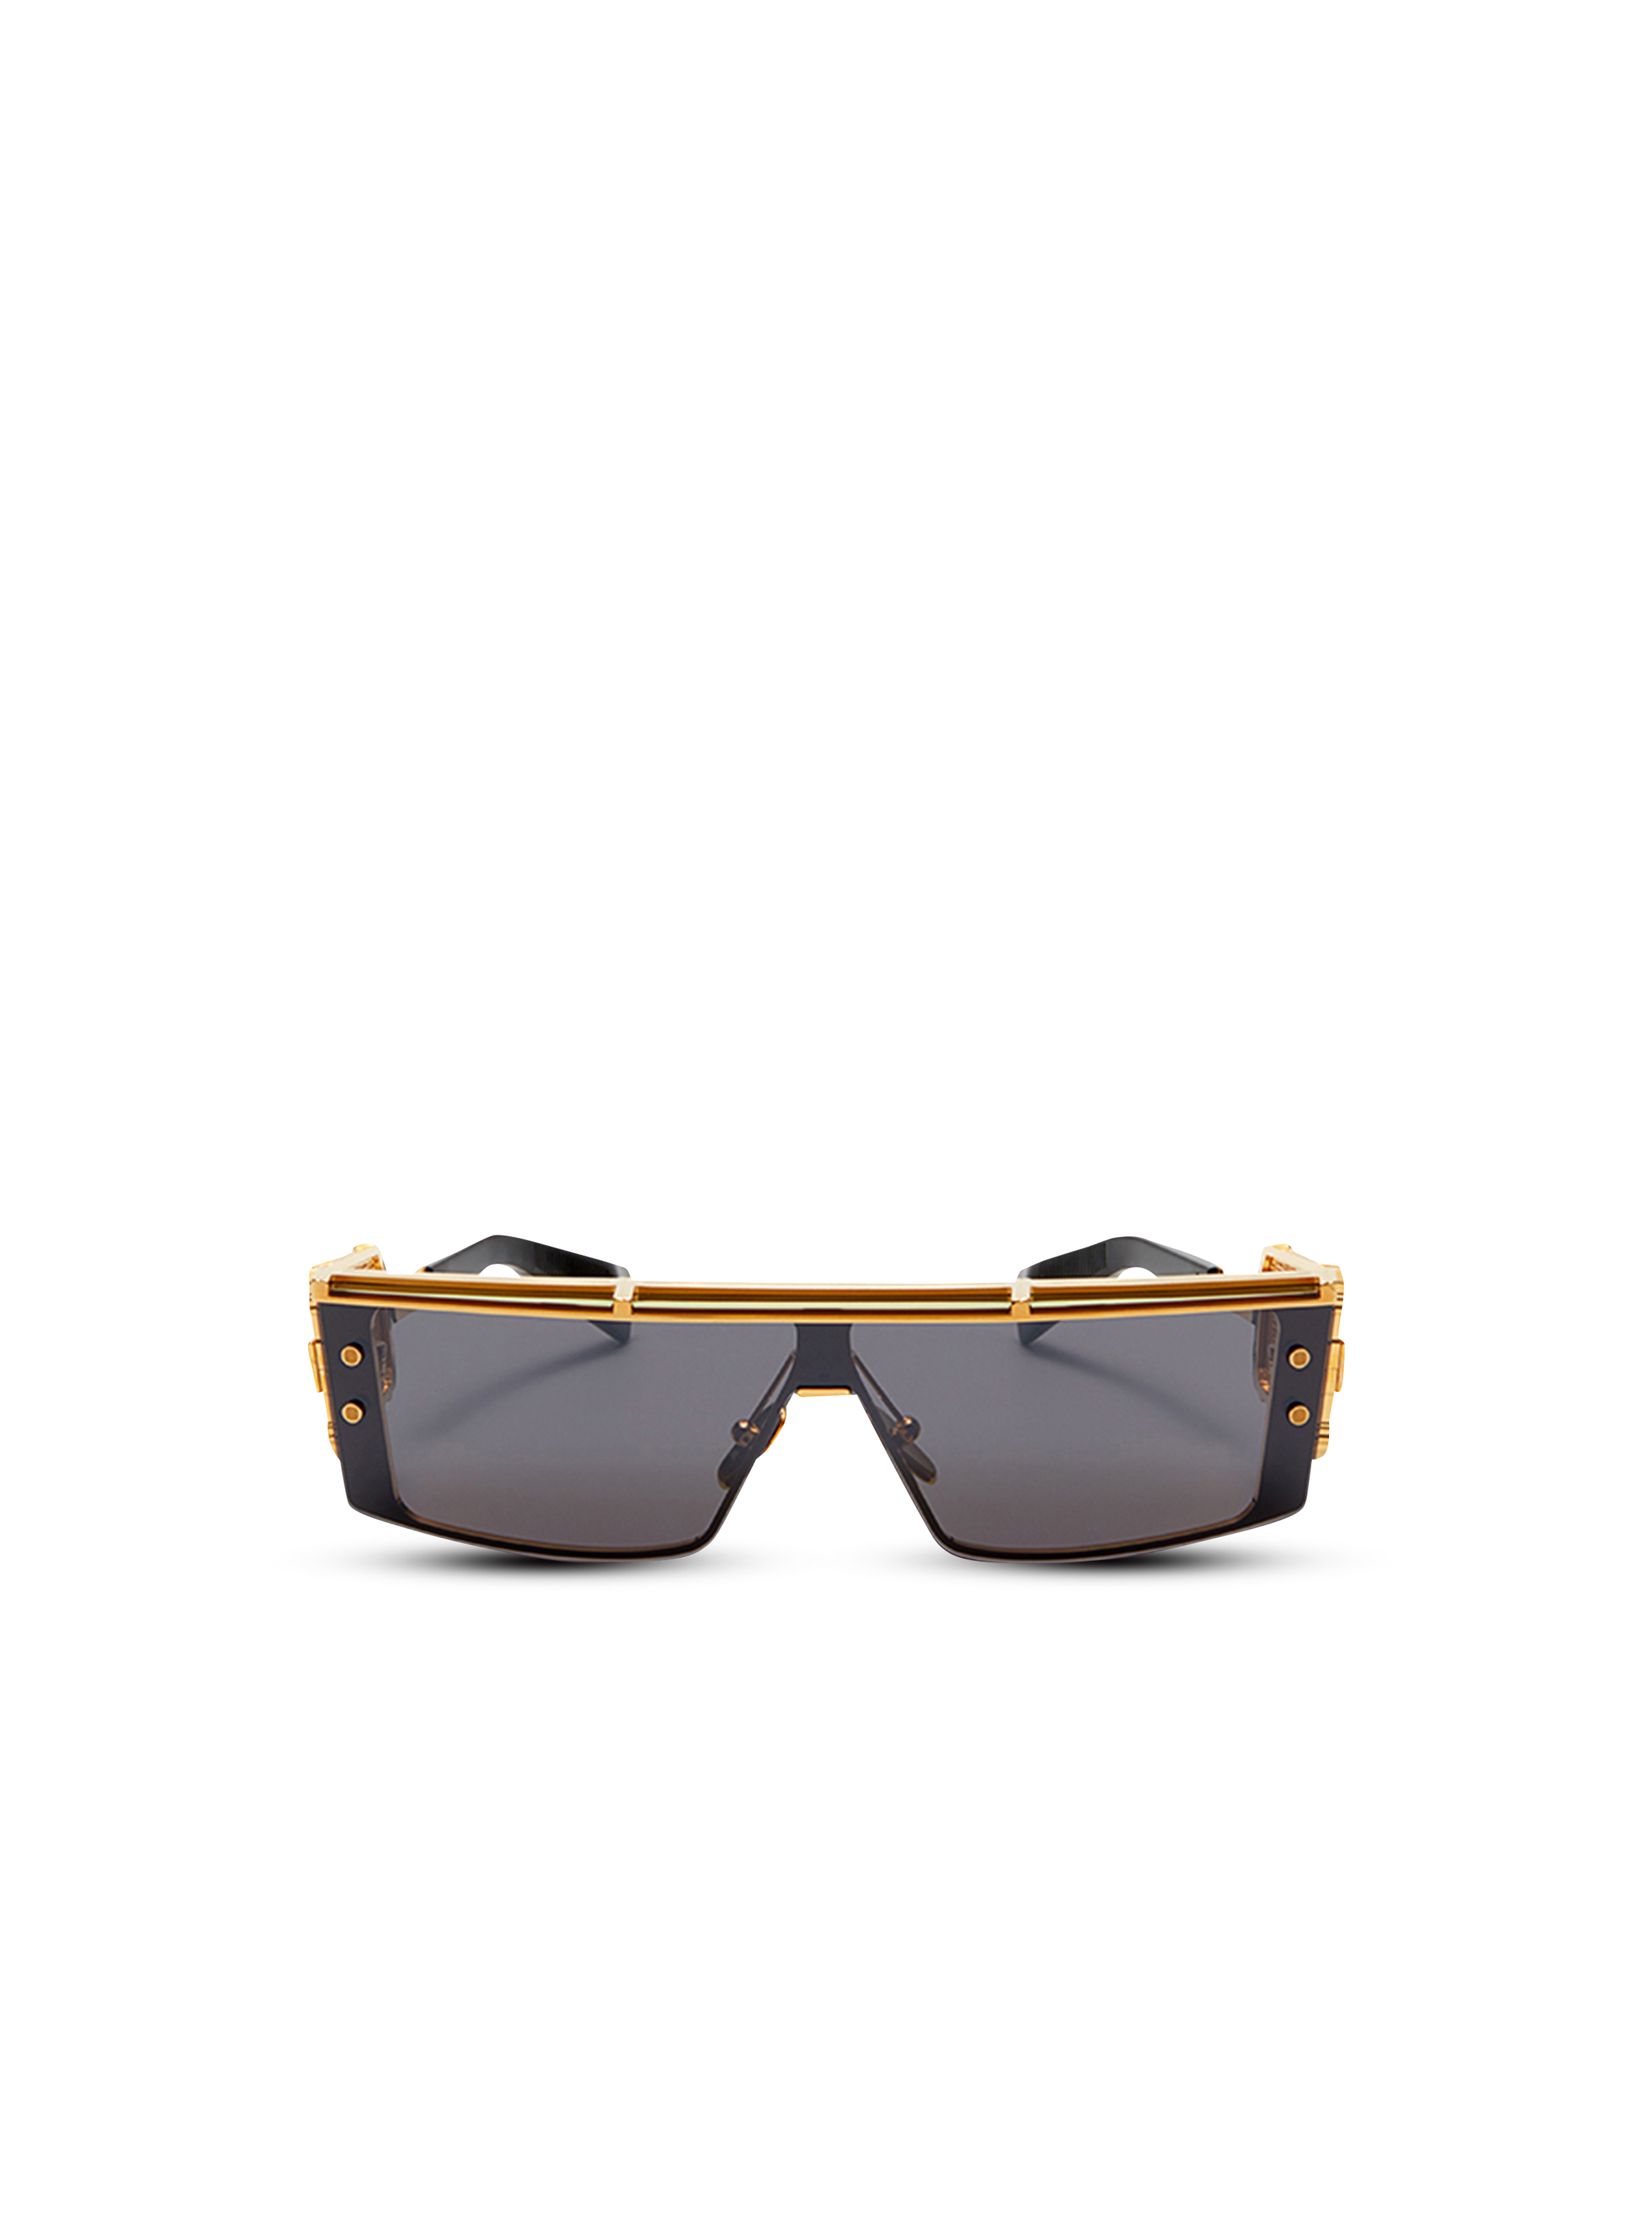 Wonder Boy III sunglasses, black